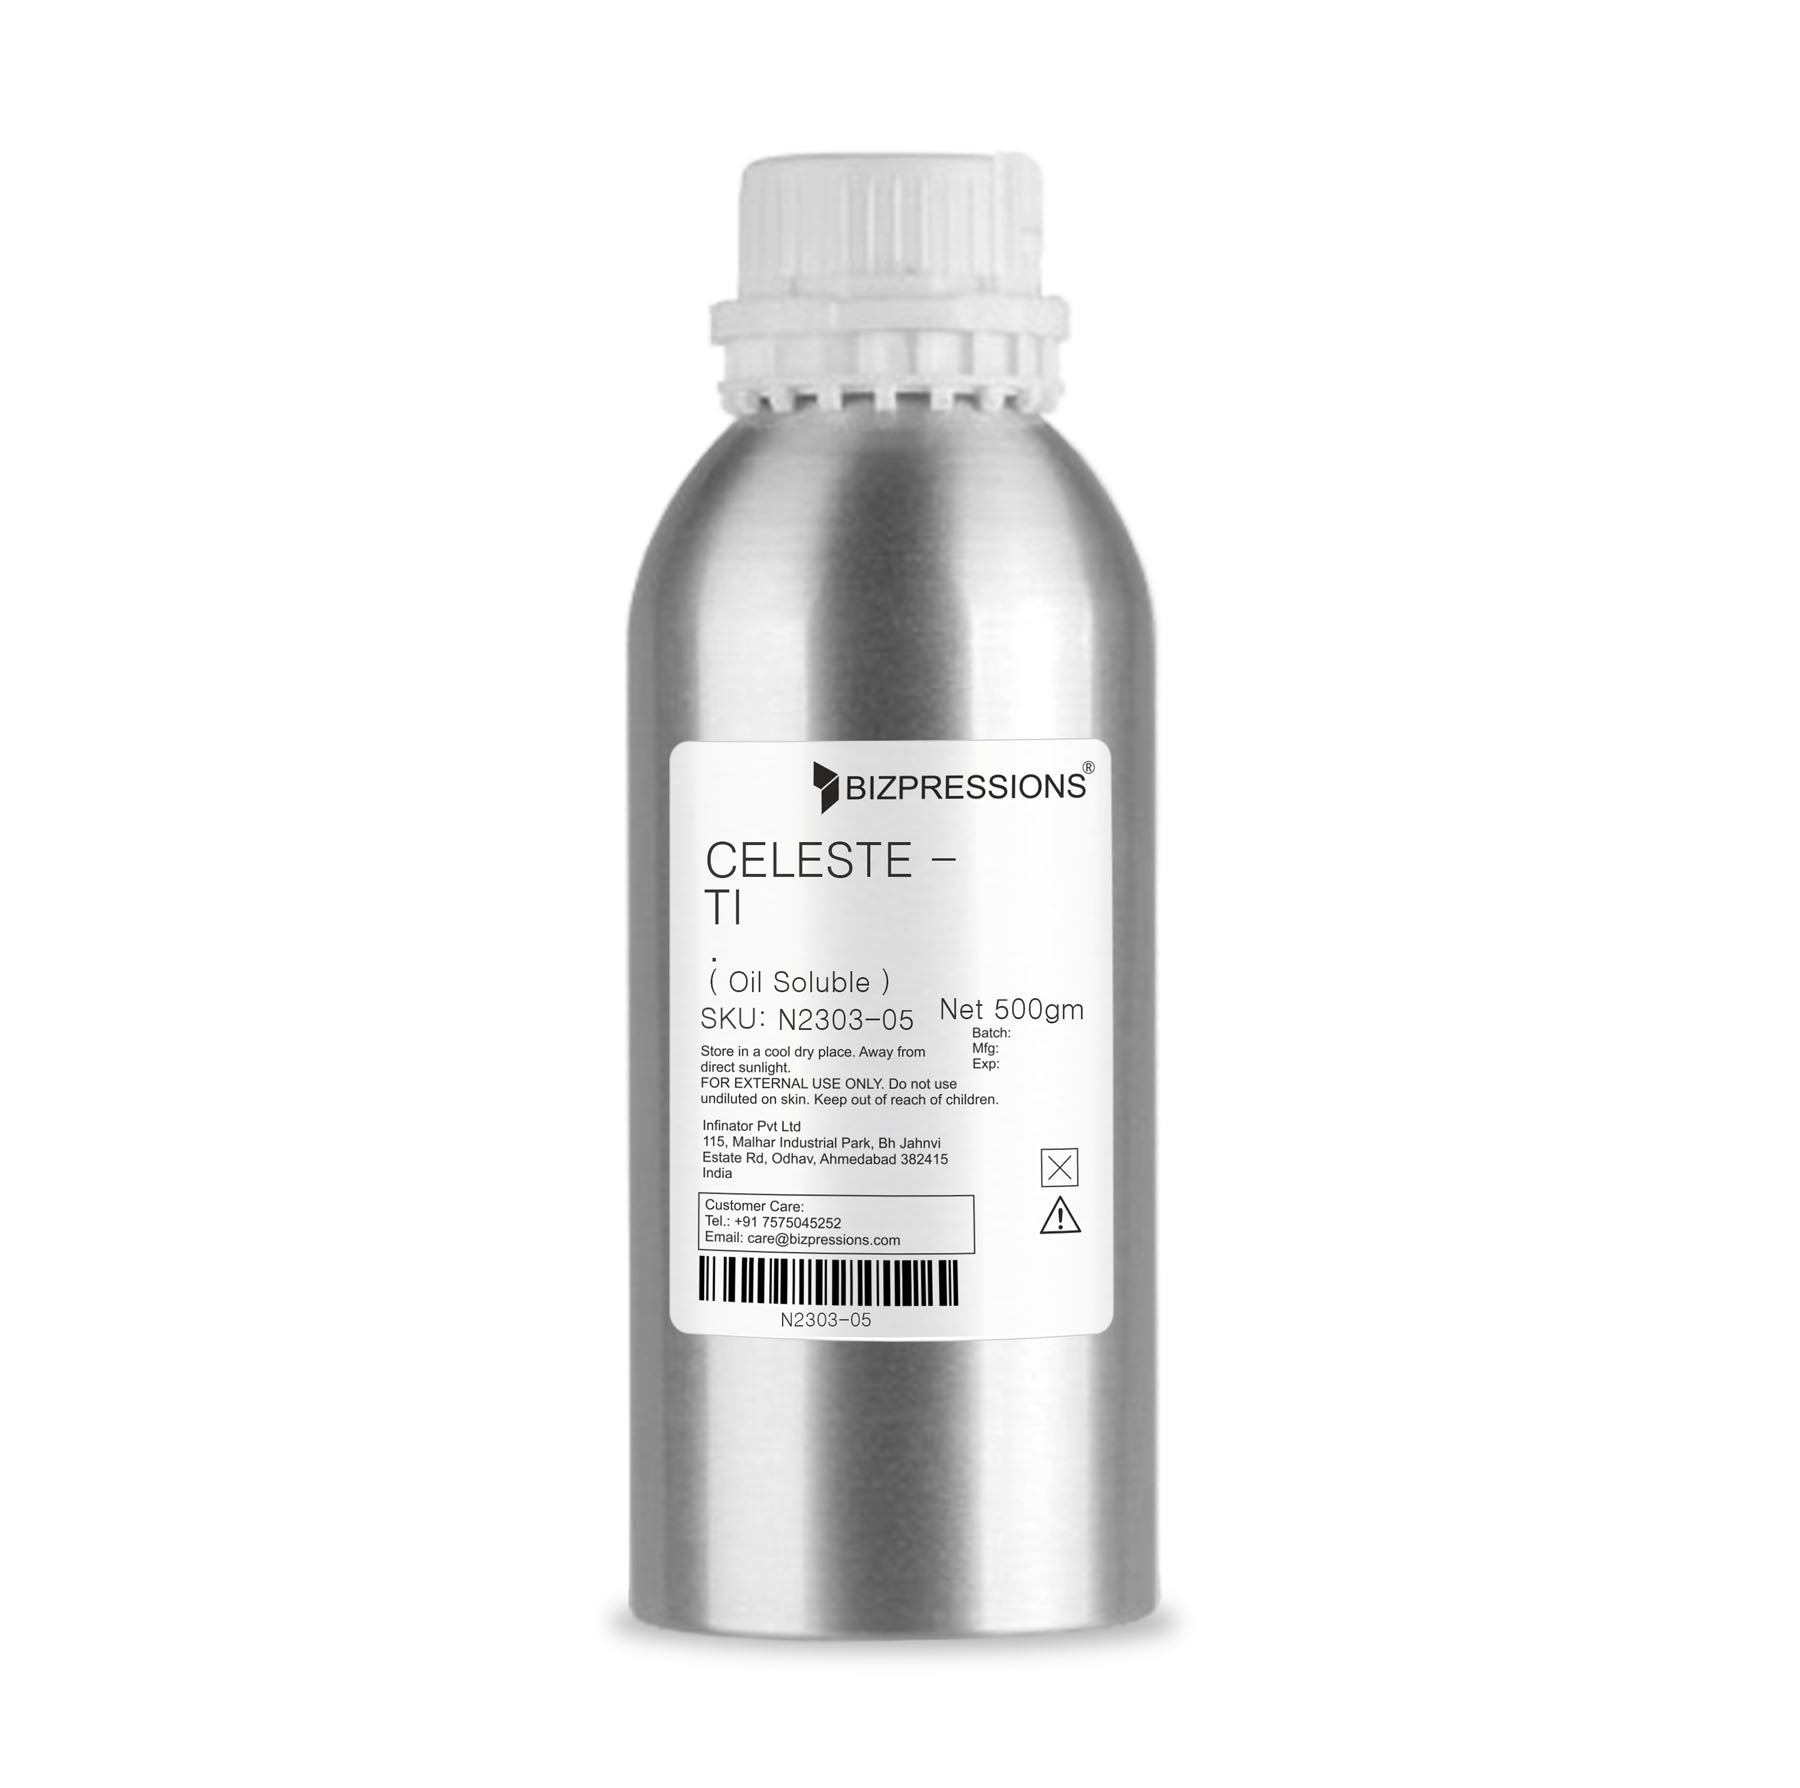 CELESTE - TI - Fragrance ( Oil Soluble ) - 500 gm